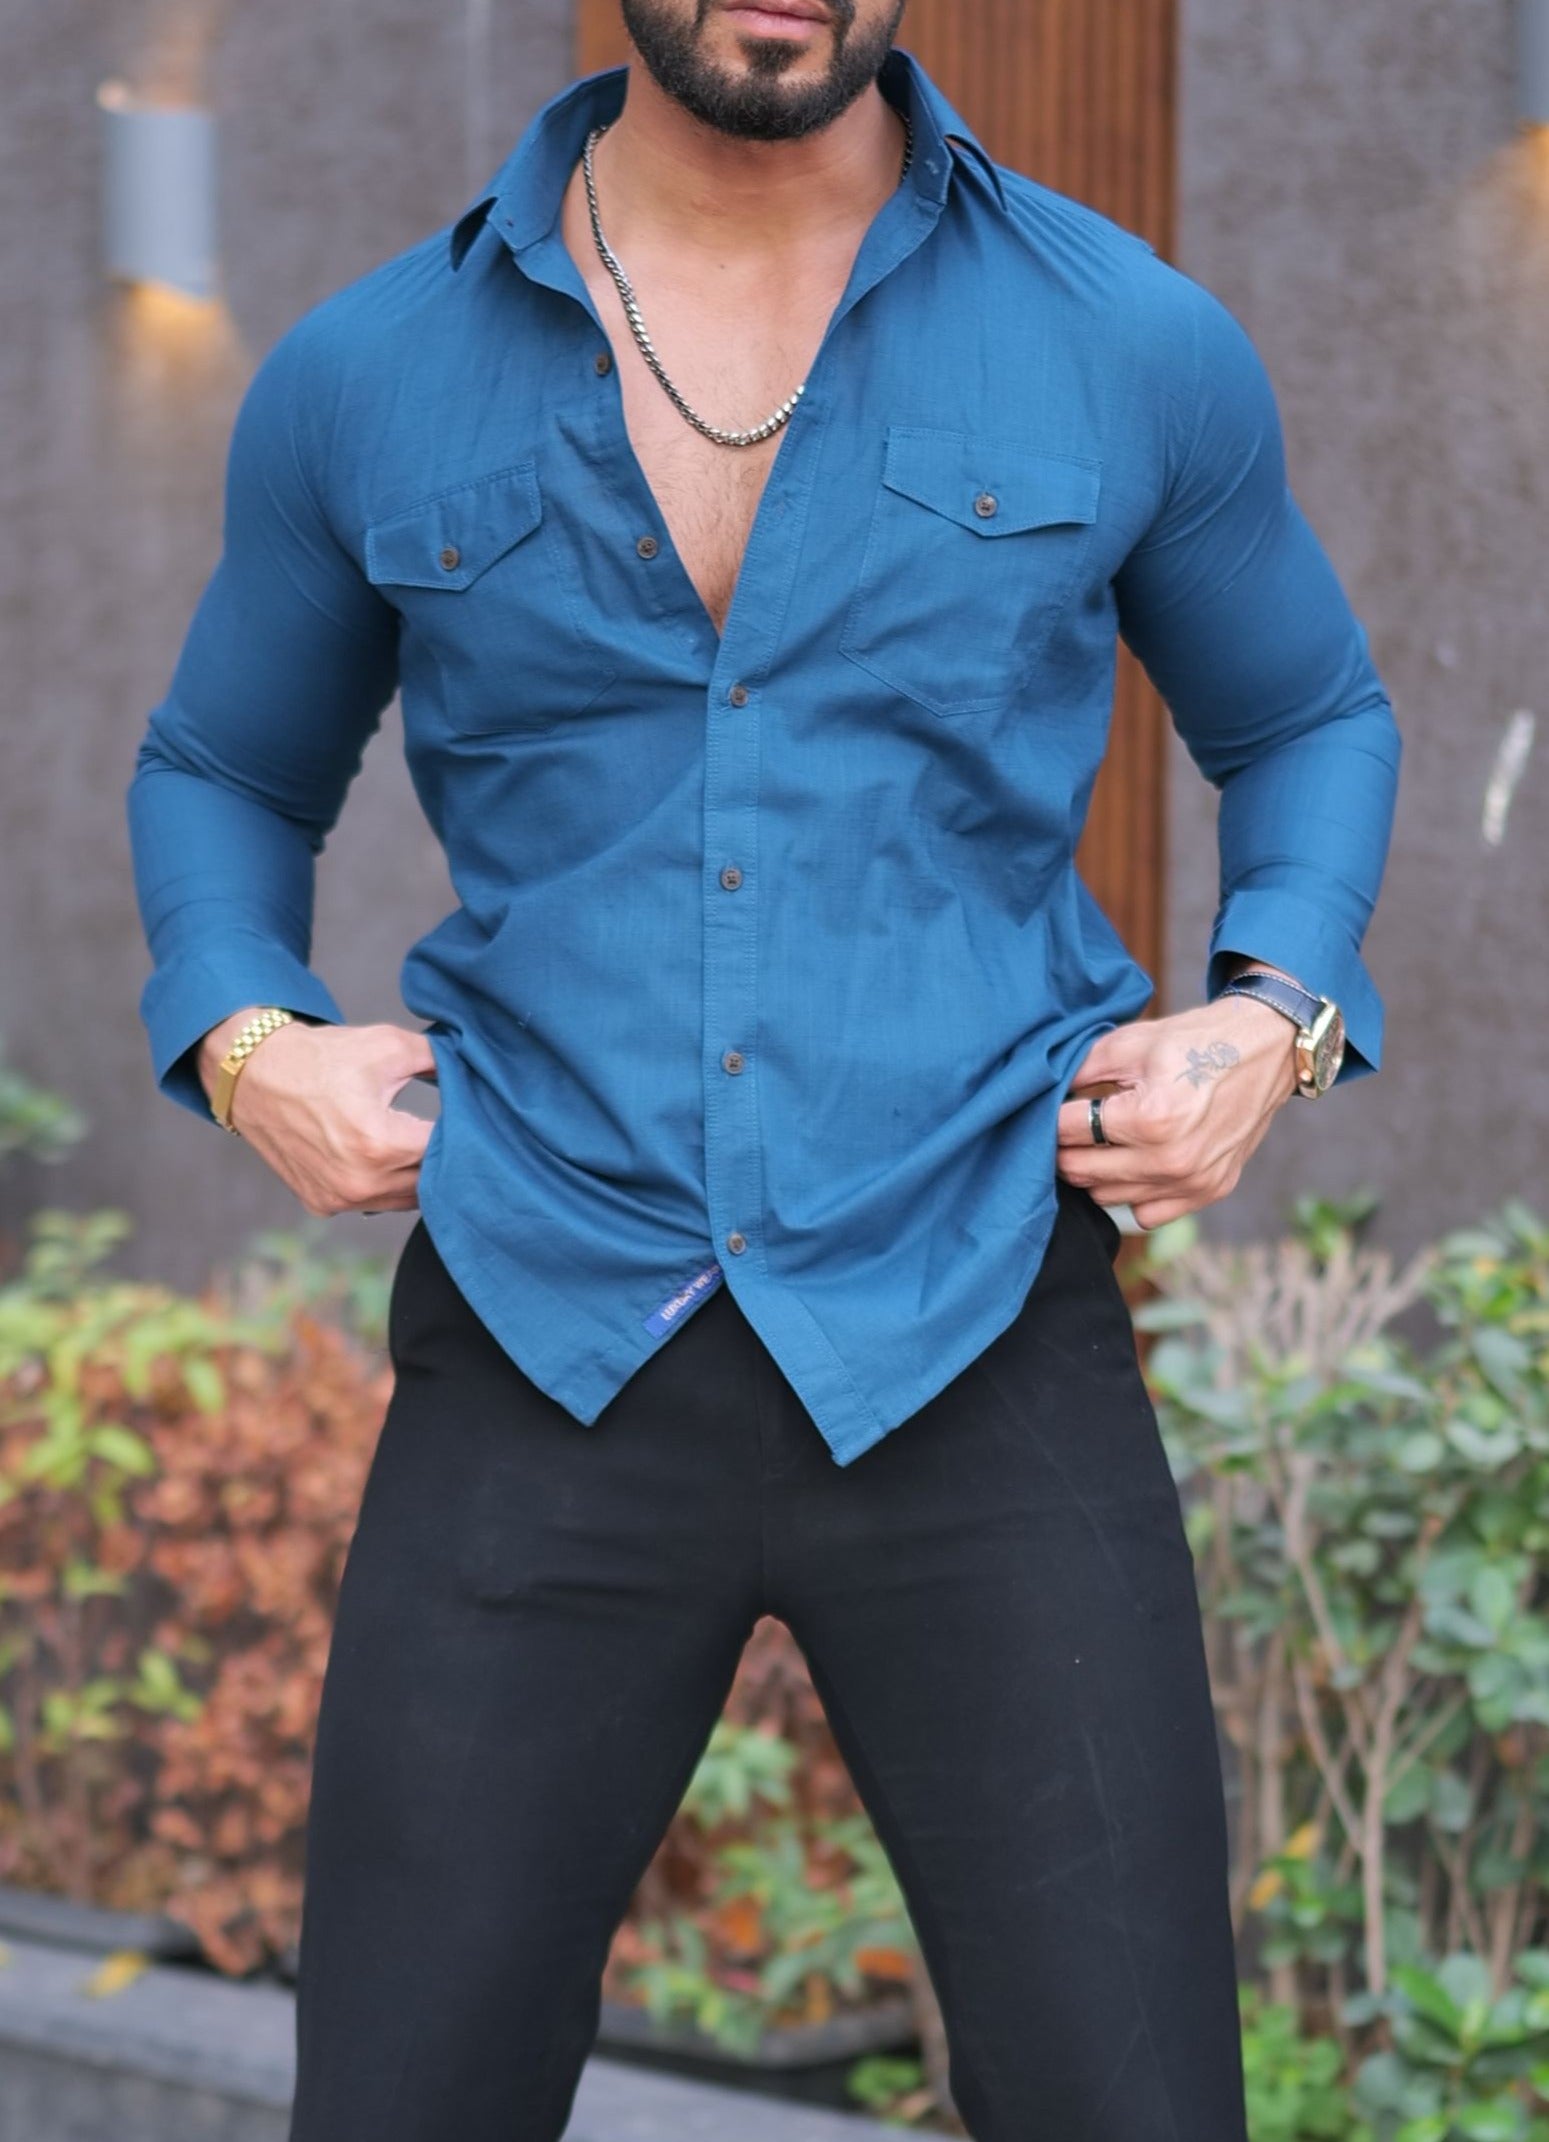 a man wearing a blue shirt and black pants